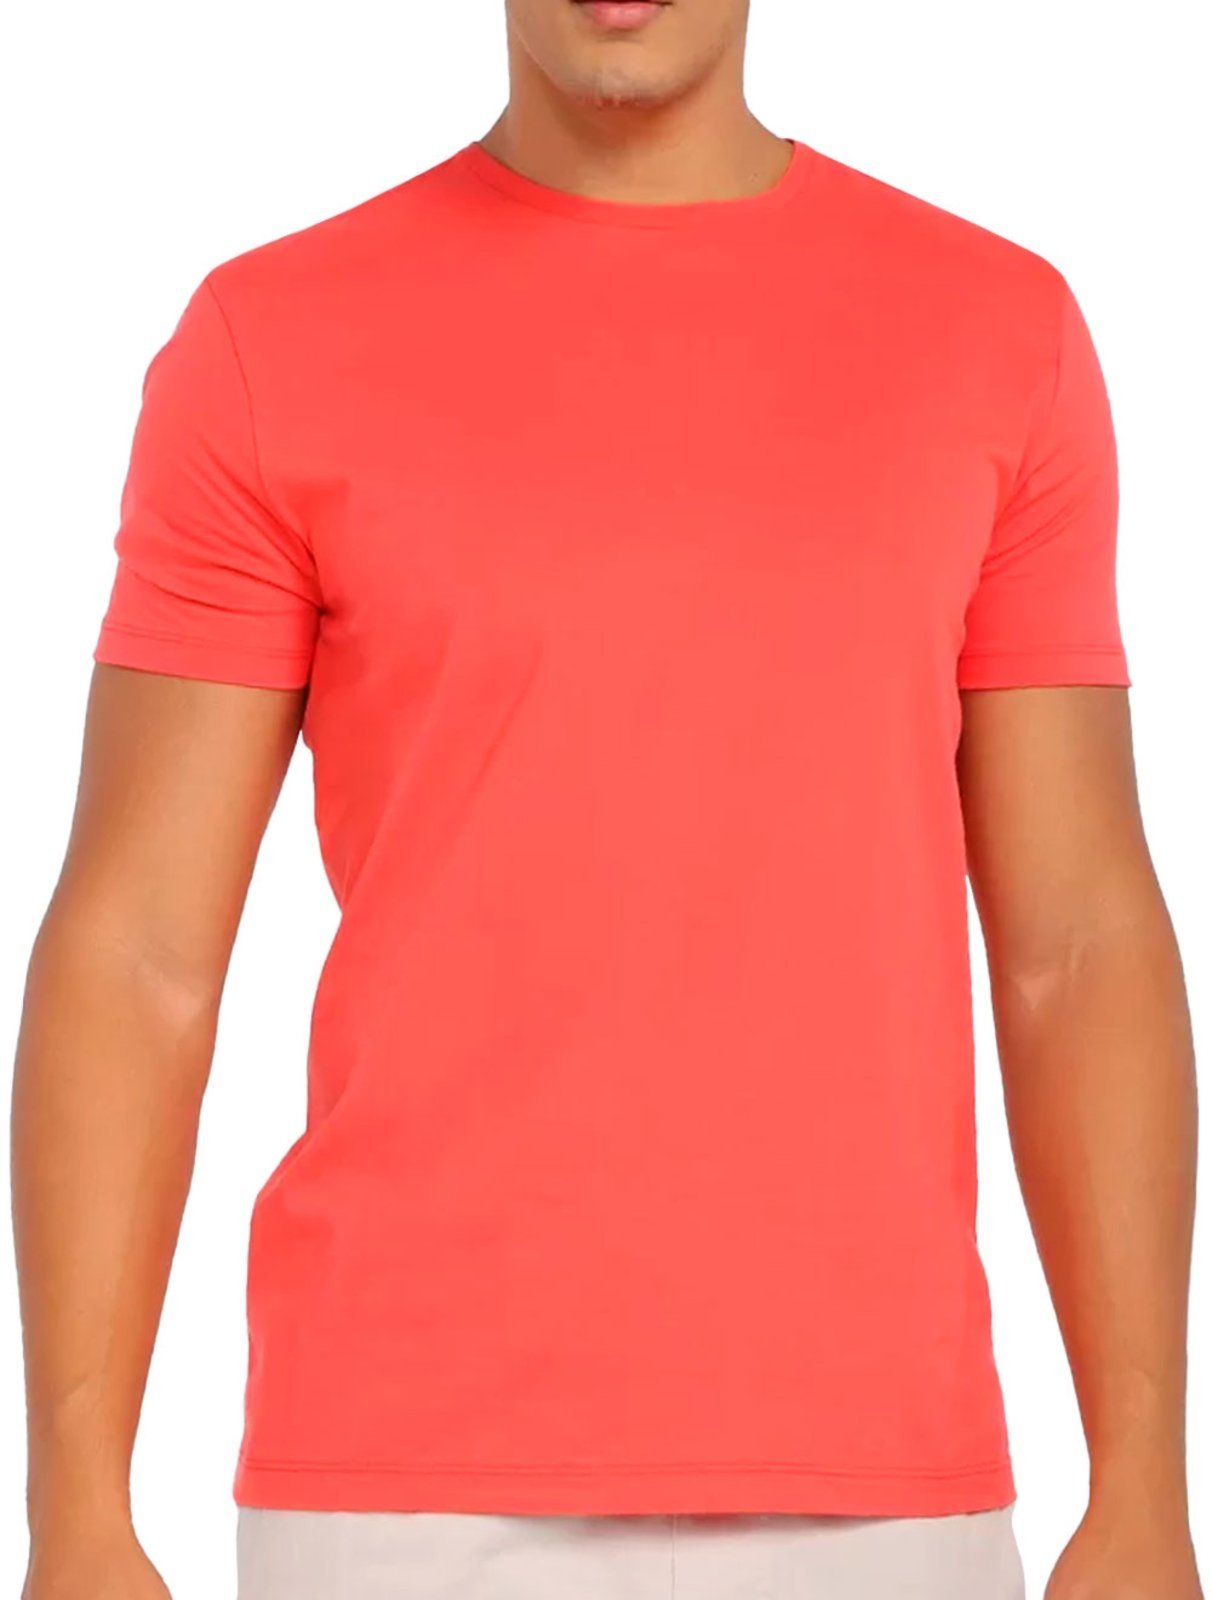 Camiseta Calvin Klein Swimwear Masculina C-Neck Shoulder Vermelha Coral -  Compre Agora